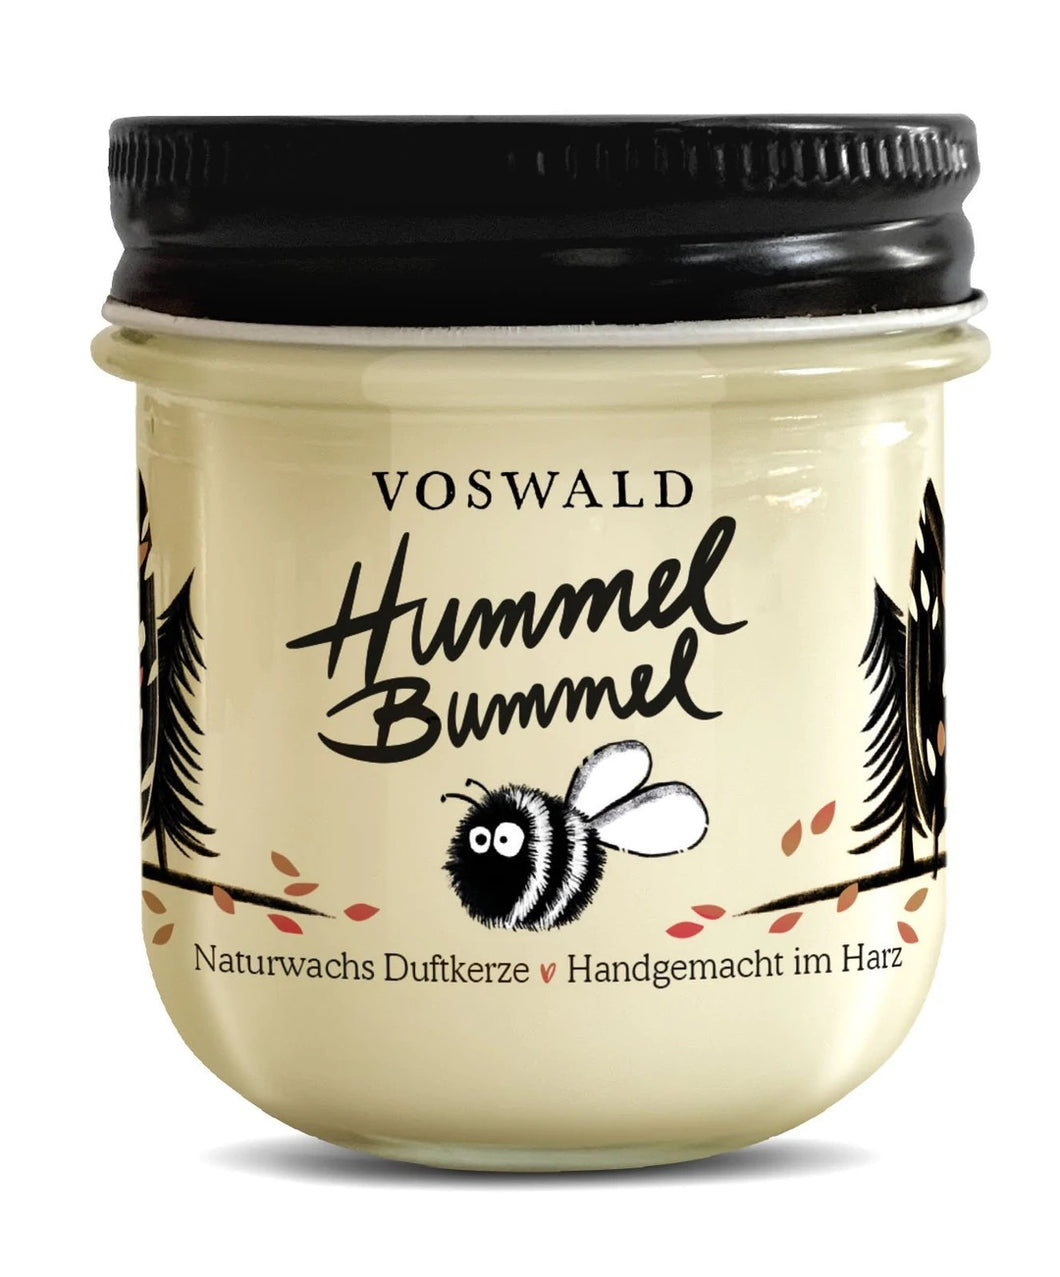 Hummel Bummel Duftkerze, Voswald, Kerzen, handgemacht, vegan